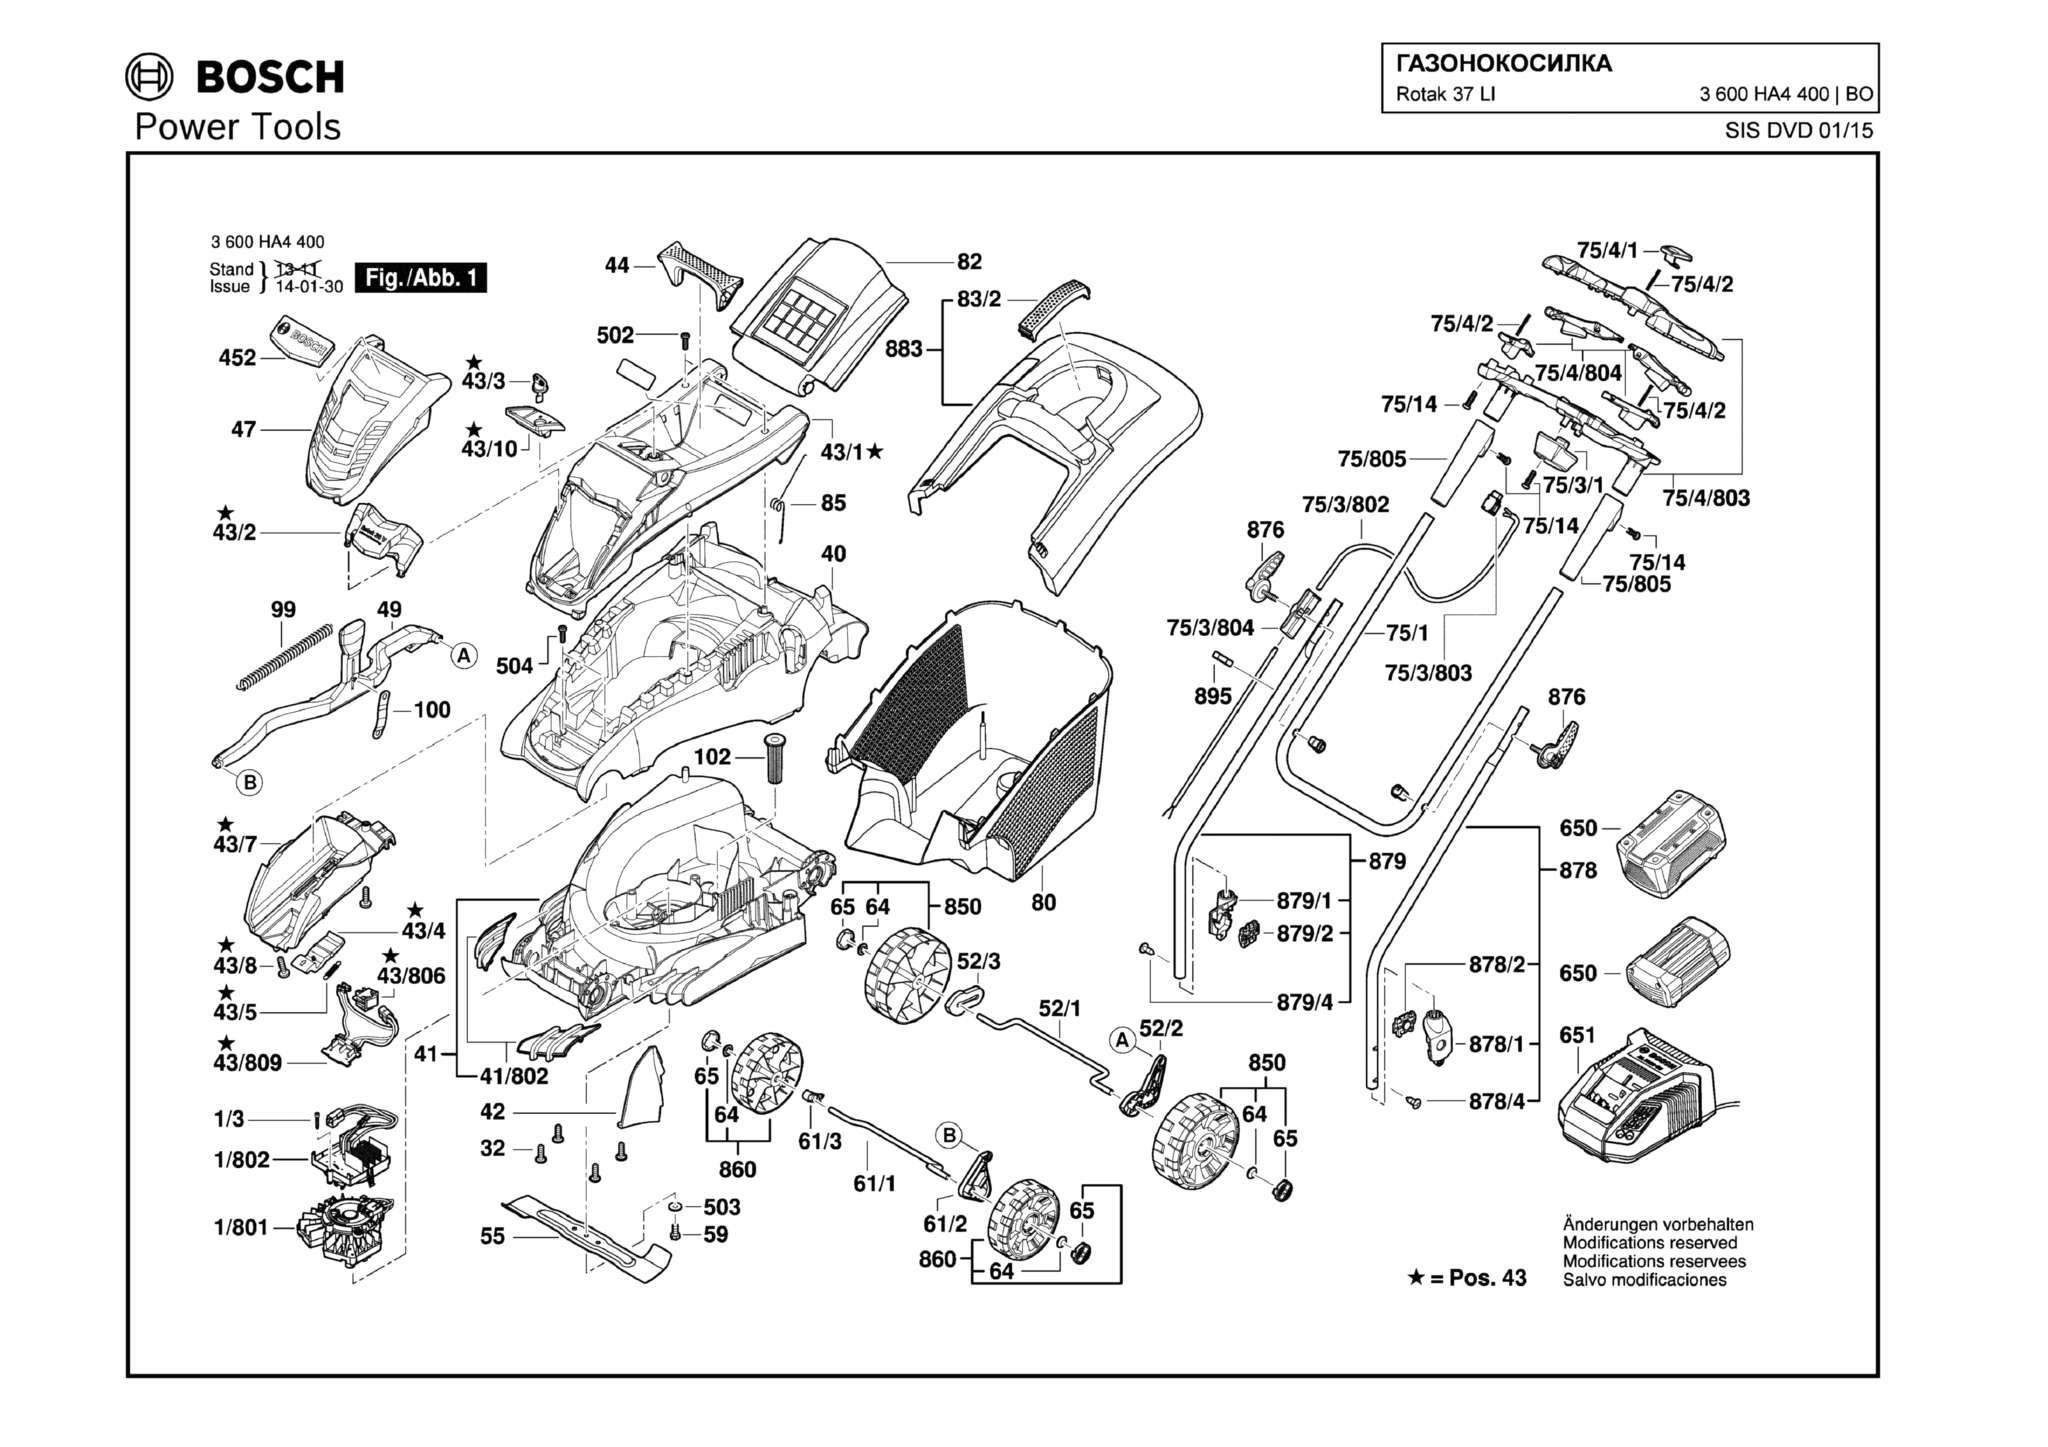 Запчасти, схема и деталировка Bosch ROTAK 37 LI (ТИП 3600HA4400)